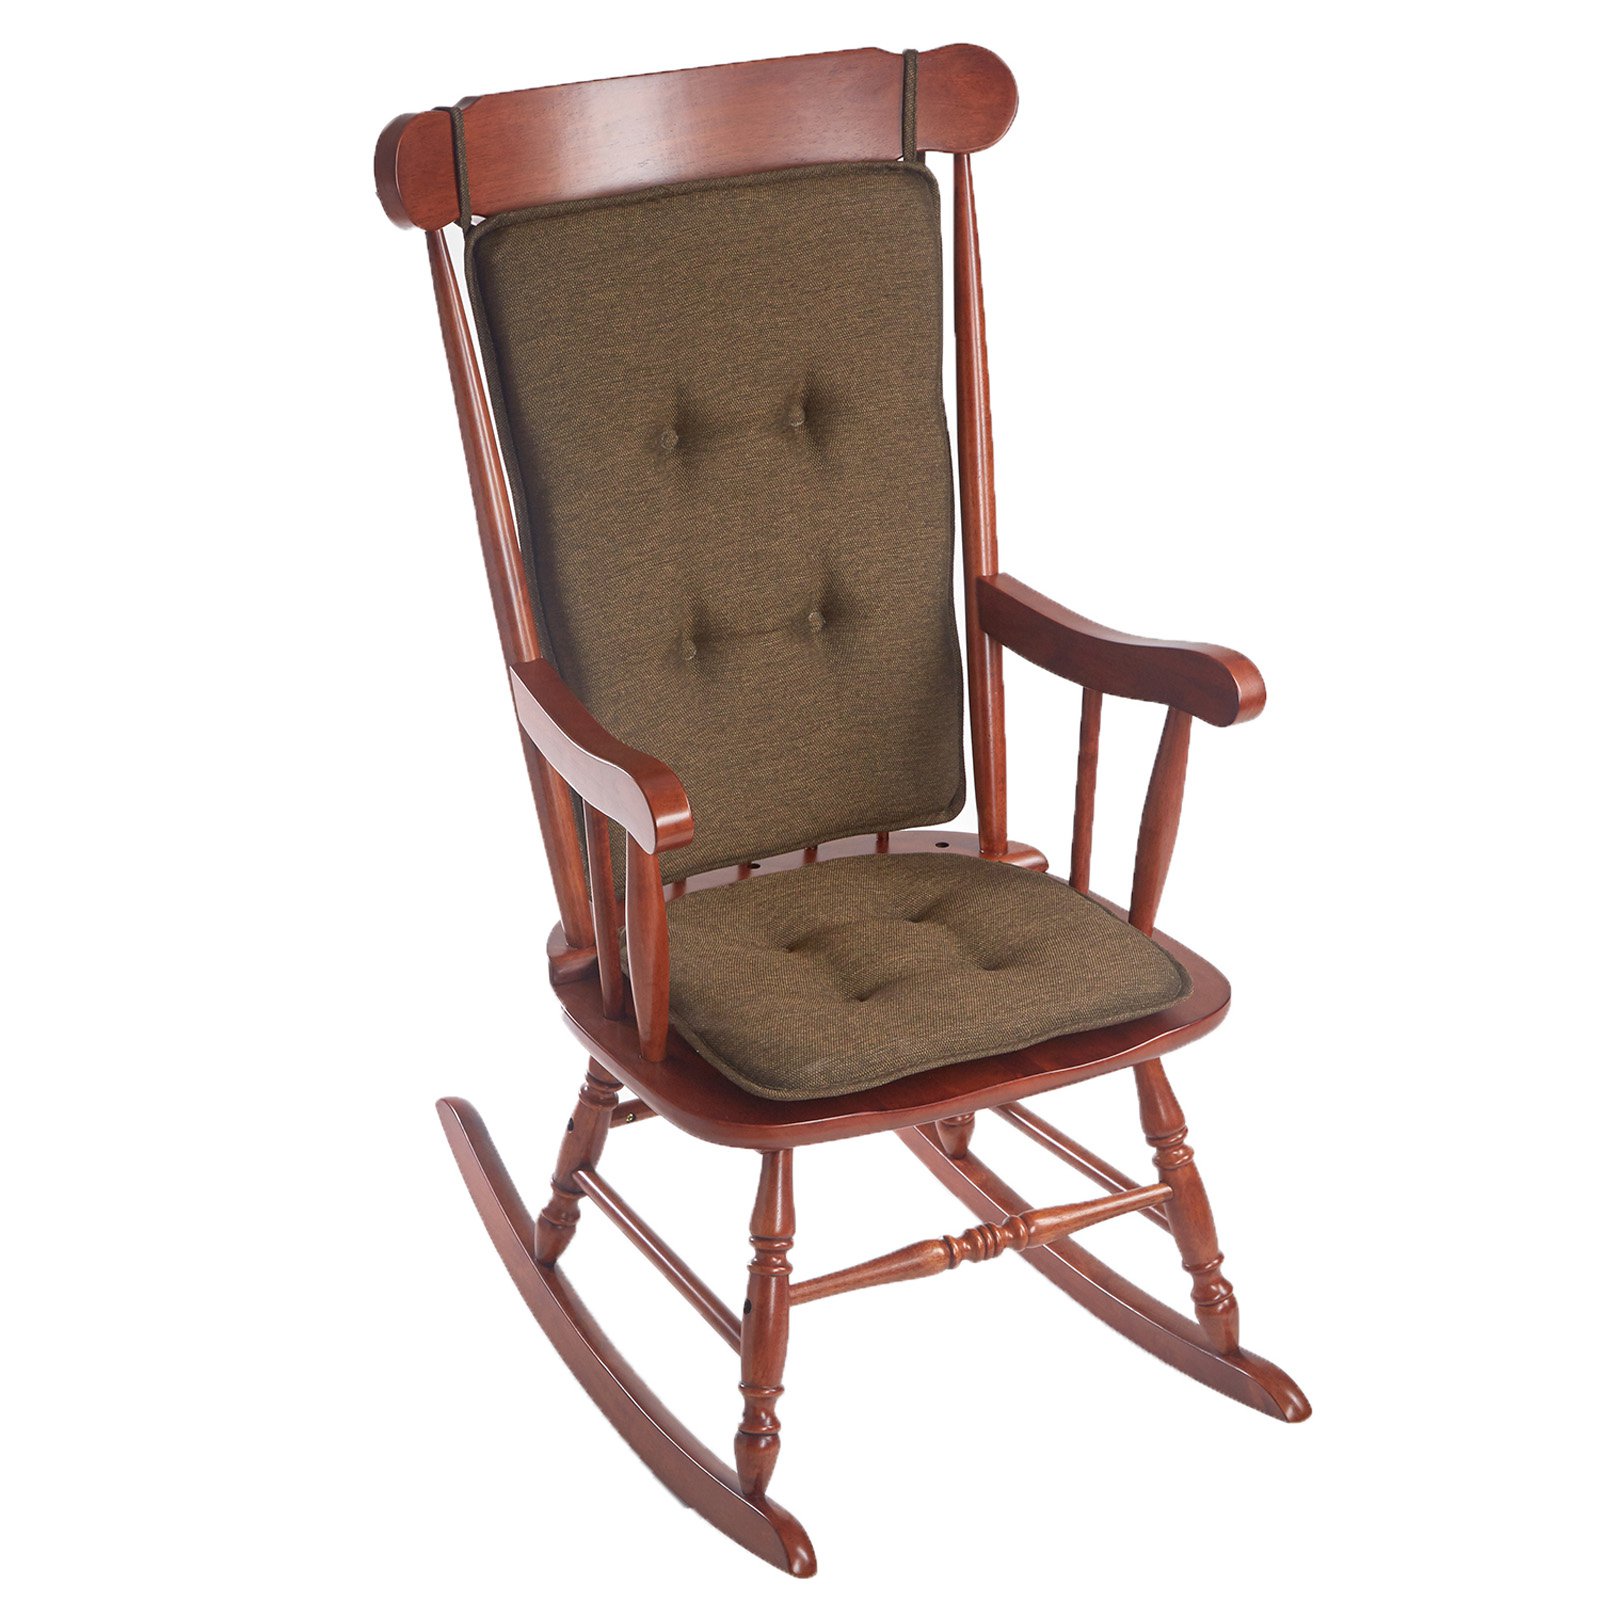 Klear Vu Saturn Dining Chair Pad Cushion Set of 4 Natural